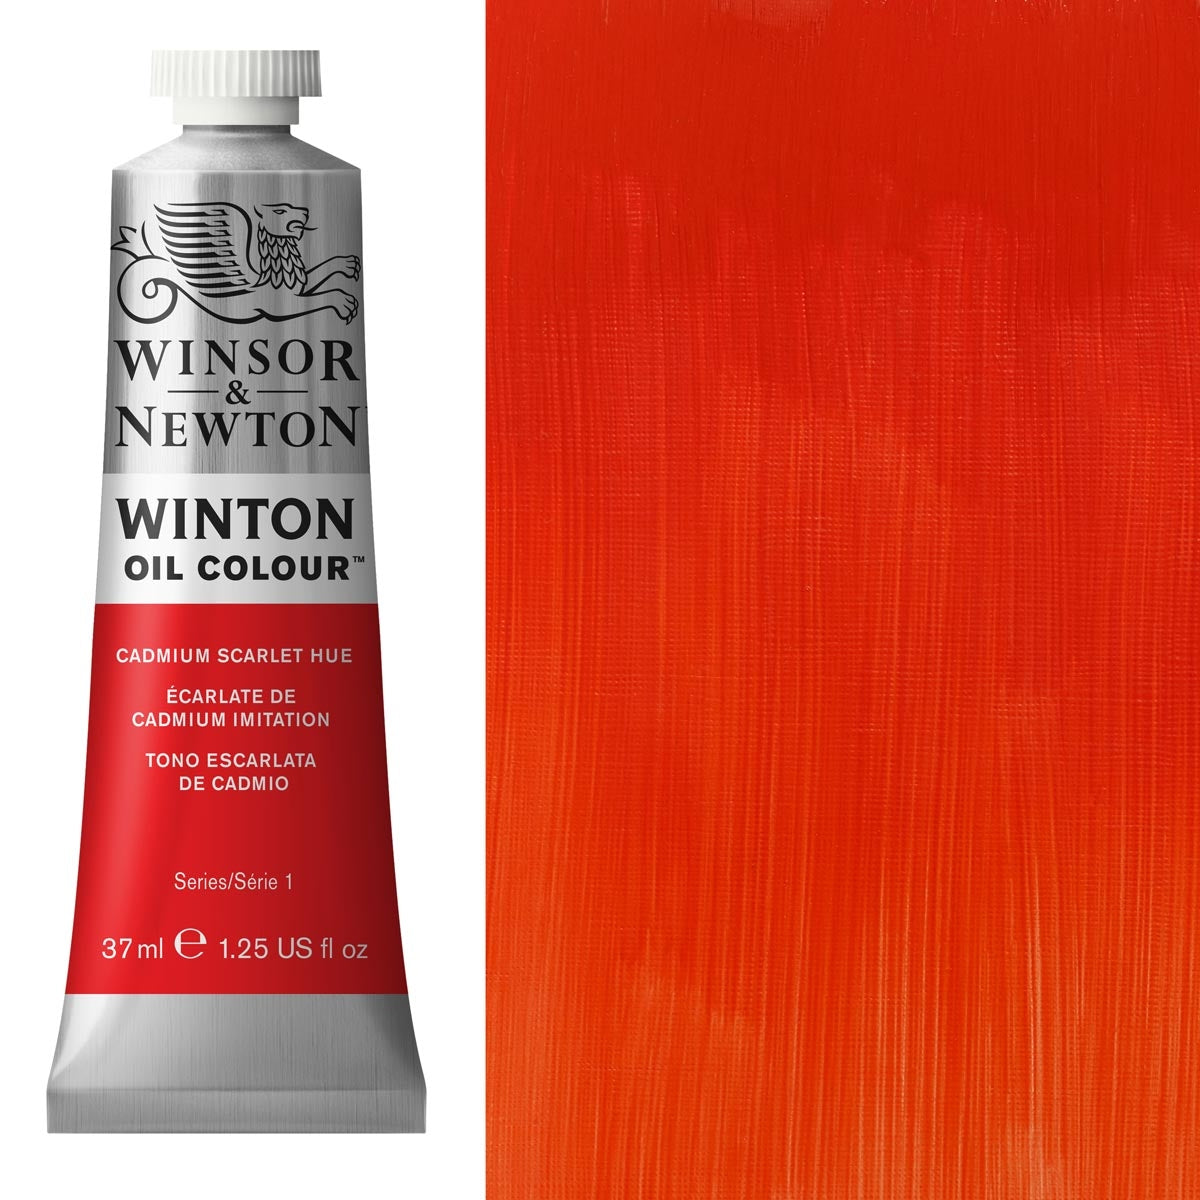 Winsor und Newton - Winton Ölfarbe - 37ml - Cad Scarlet Hue